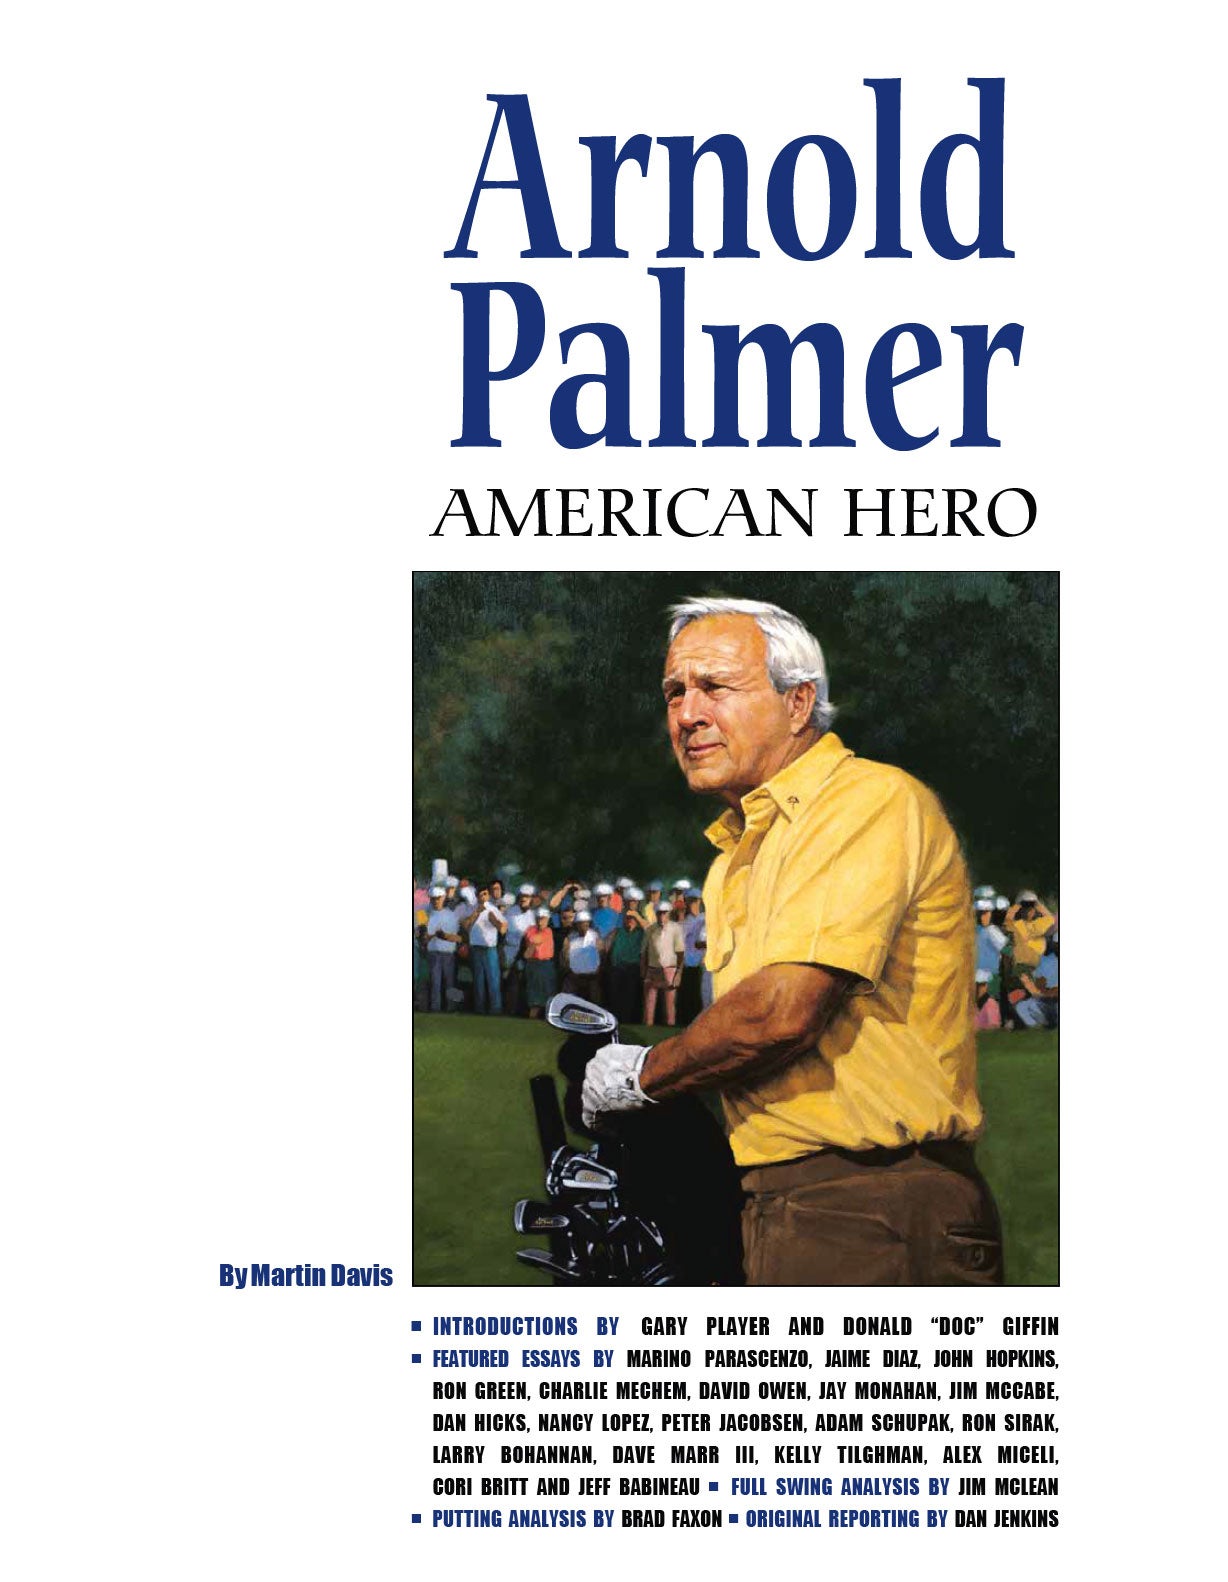 Arnold Palmer: American Hero book cover, Copyright © 2022 The American Golfer, Inc.